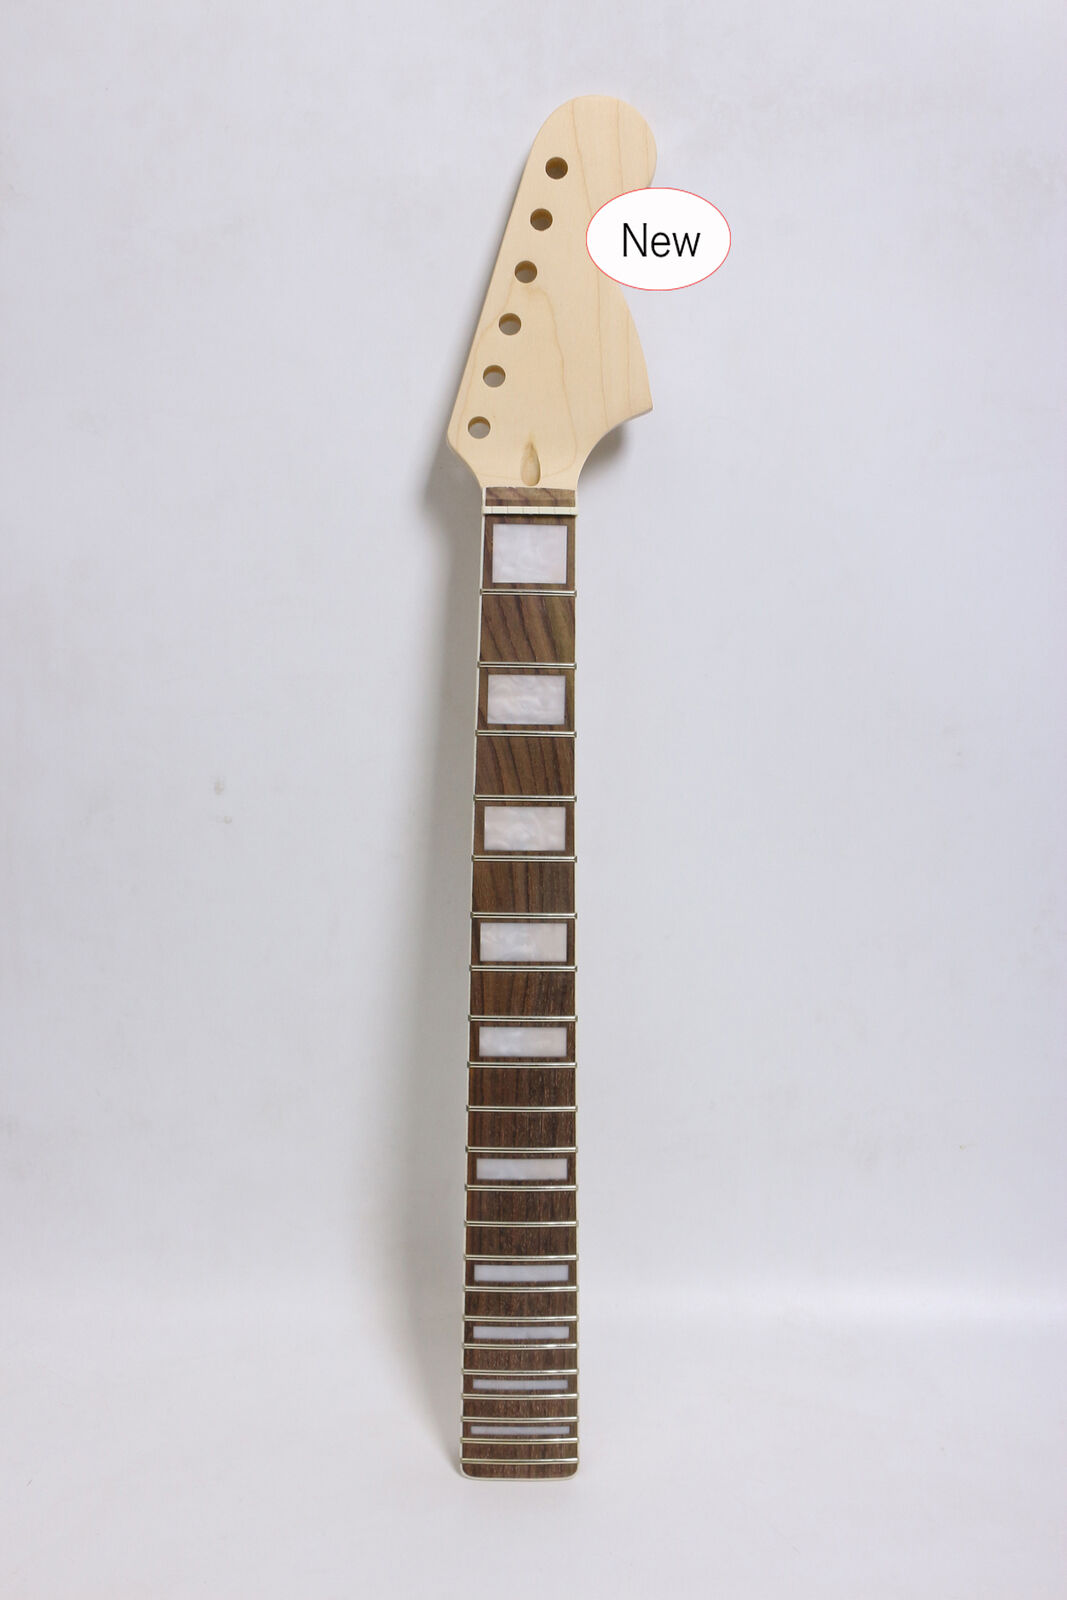  Maple Guitar Neck 22fret 30inch Block Inlay Rosewood Fretboard baritone necks